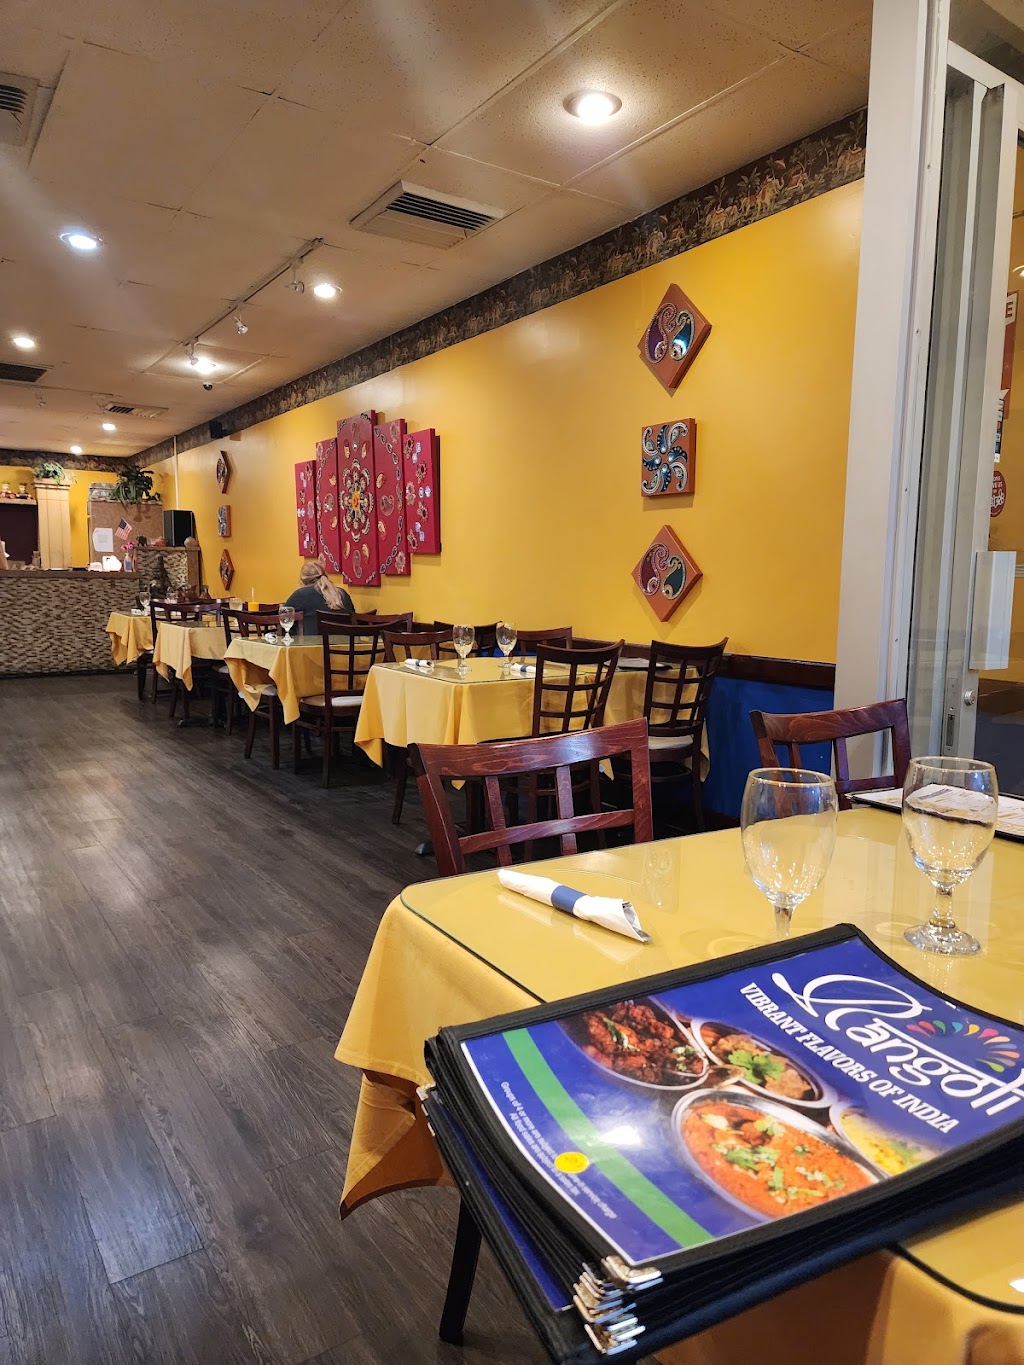 Rangoli: Vibrant Flavors Of India | 10863 Bustleton Ave, Philadelphia, PA 19116 | Phone: (215) 677-4400